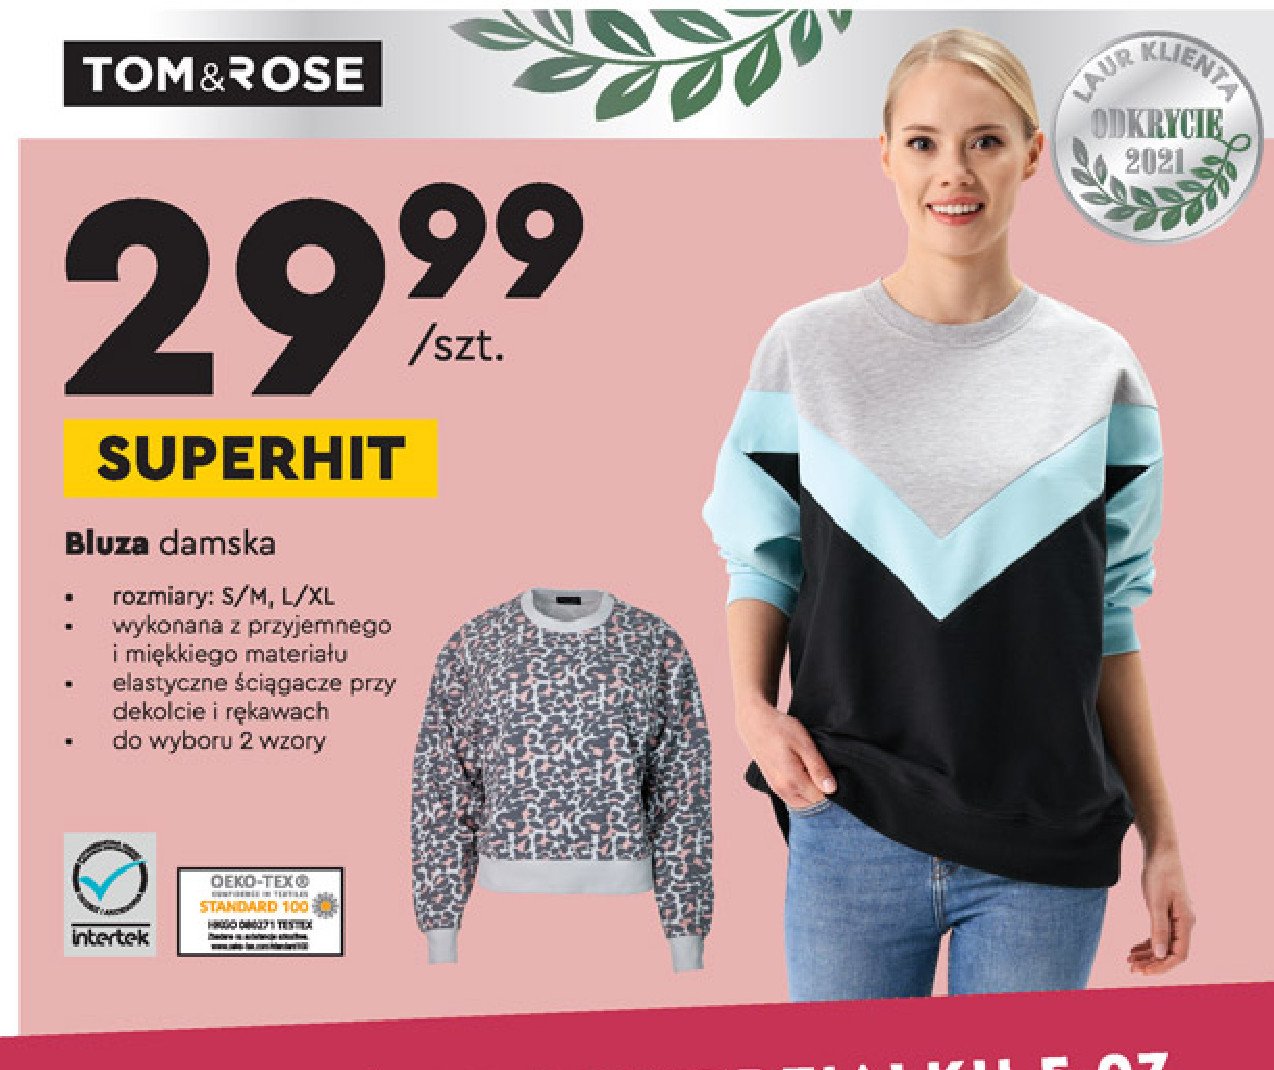 Bluza damska l/xl Tom & rose promocja